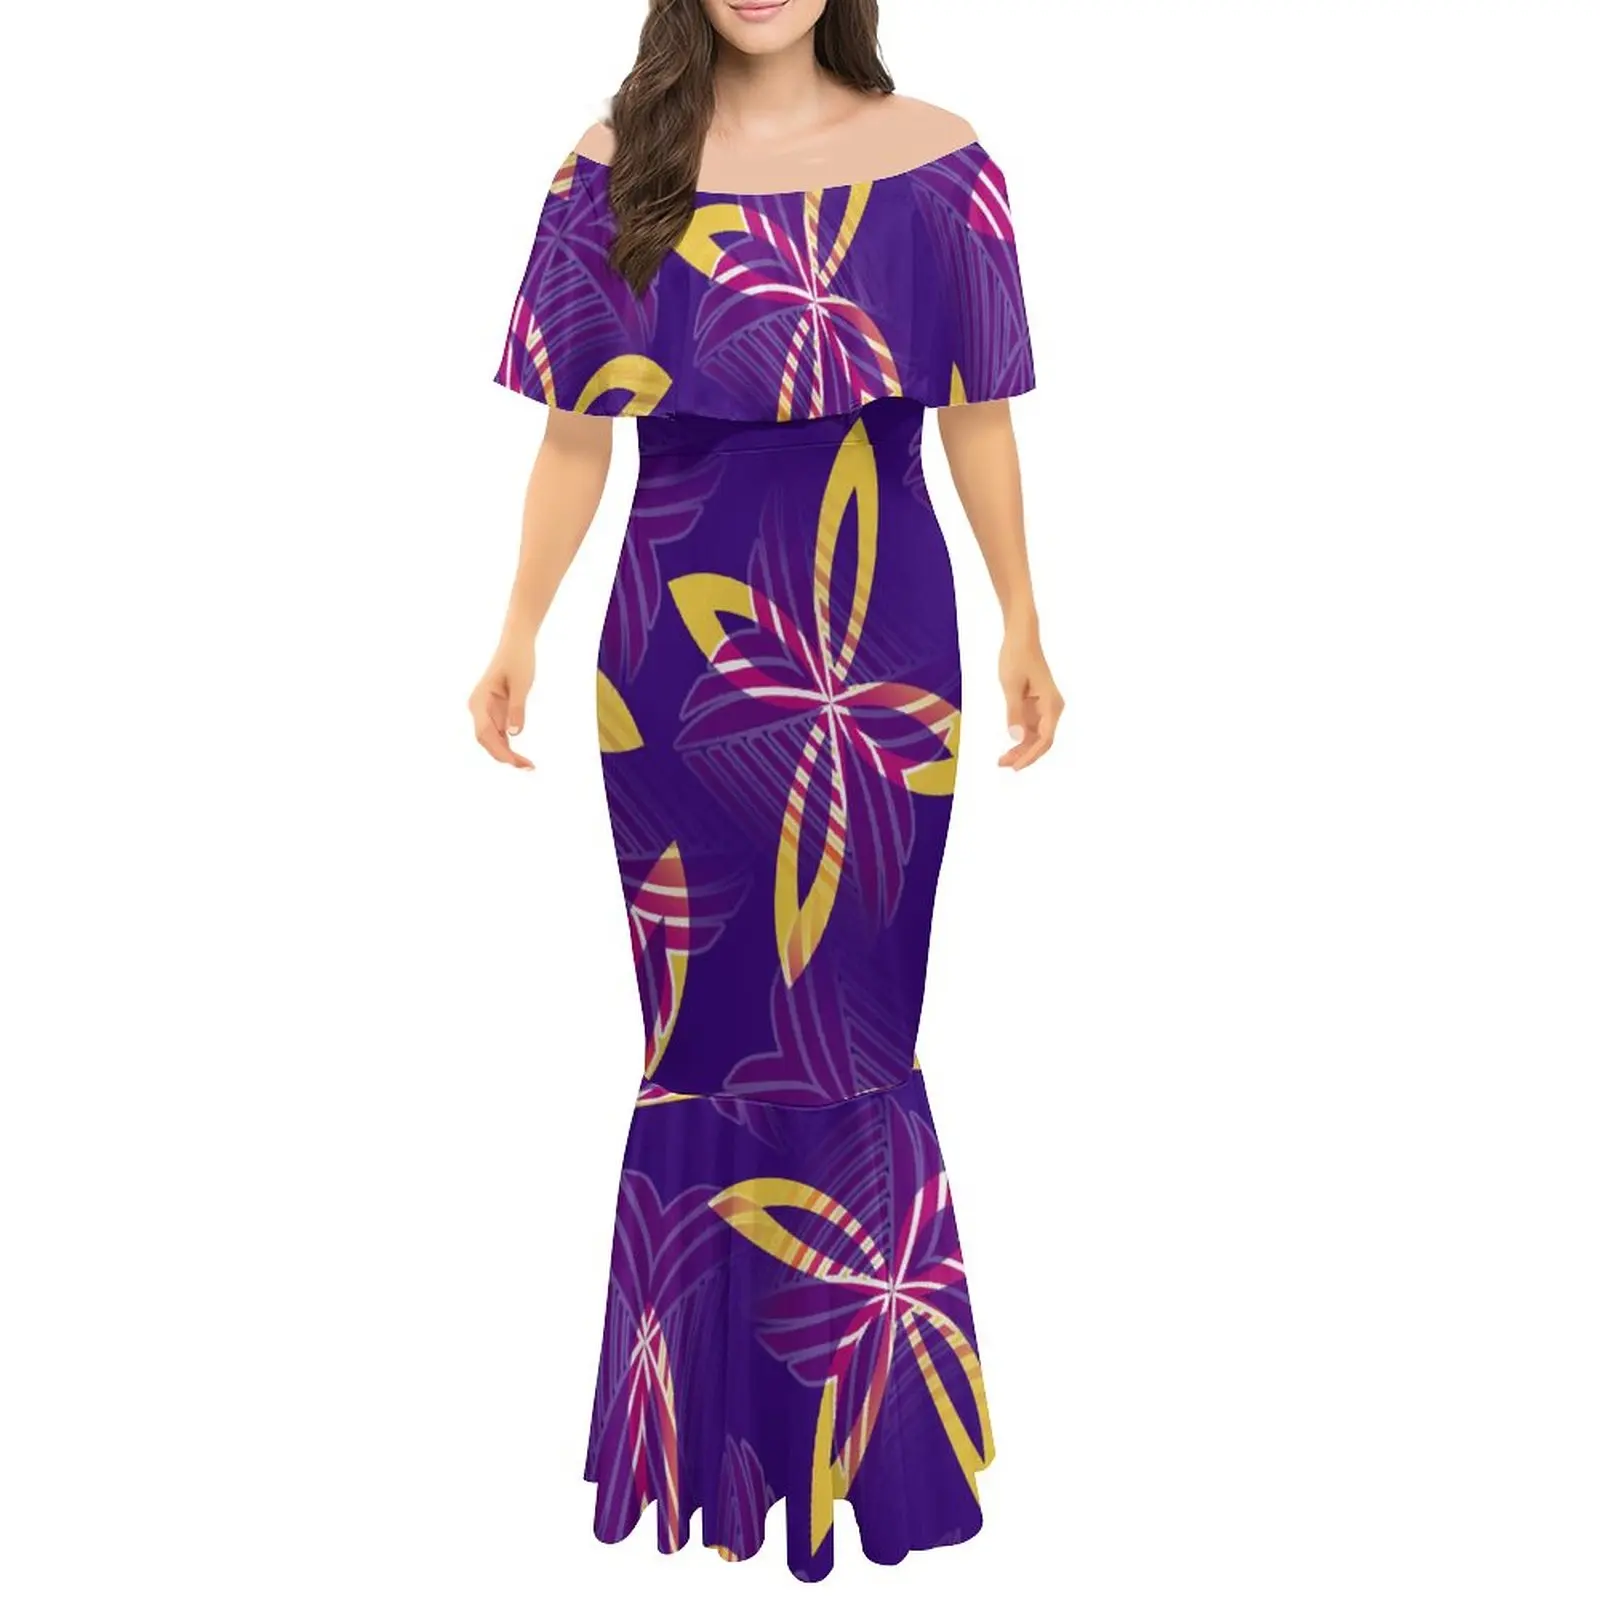 New Tribal Mermaid Dresses Upscale Low Price Free Shipping Samoan Tribal Mermaid Dress Off Shoulder Bodycon Women Mermaid Dress